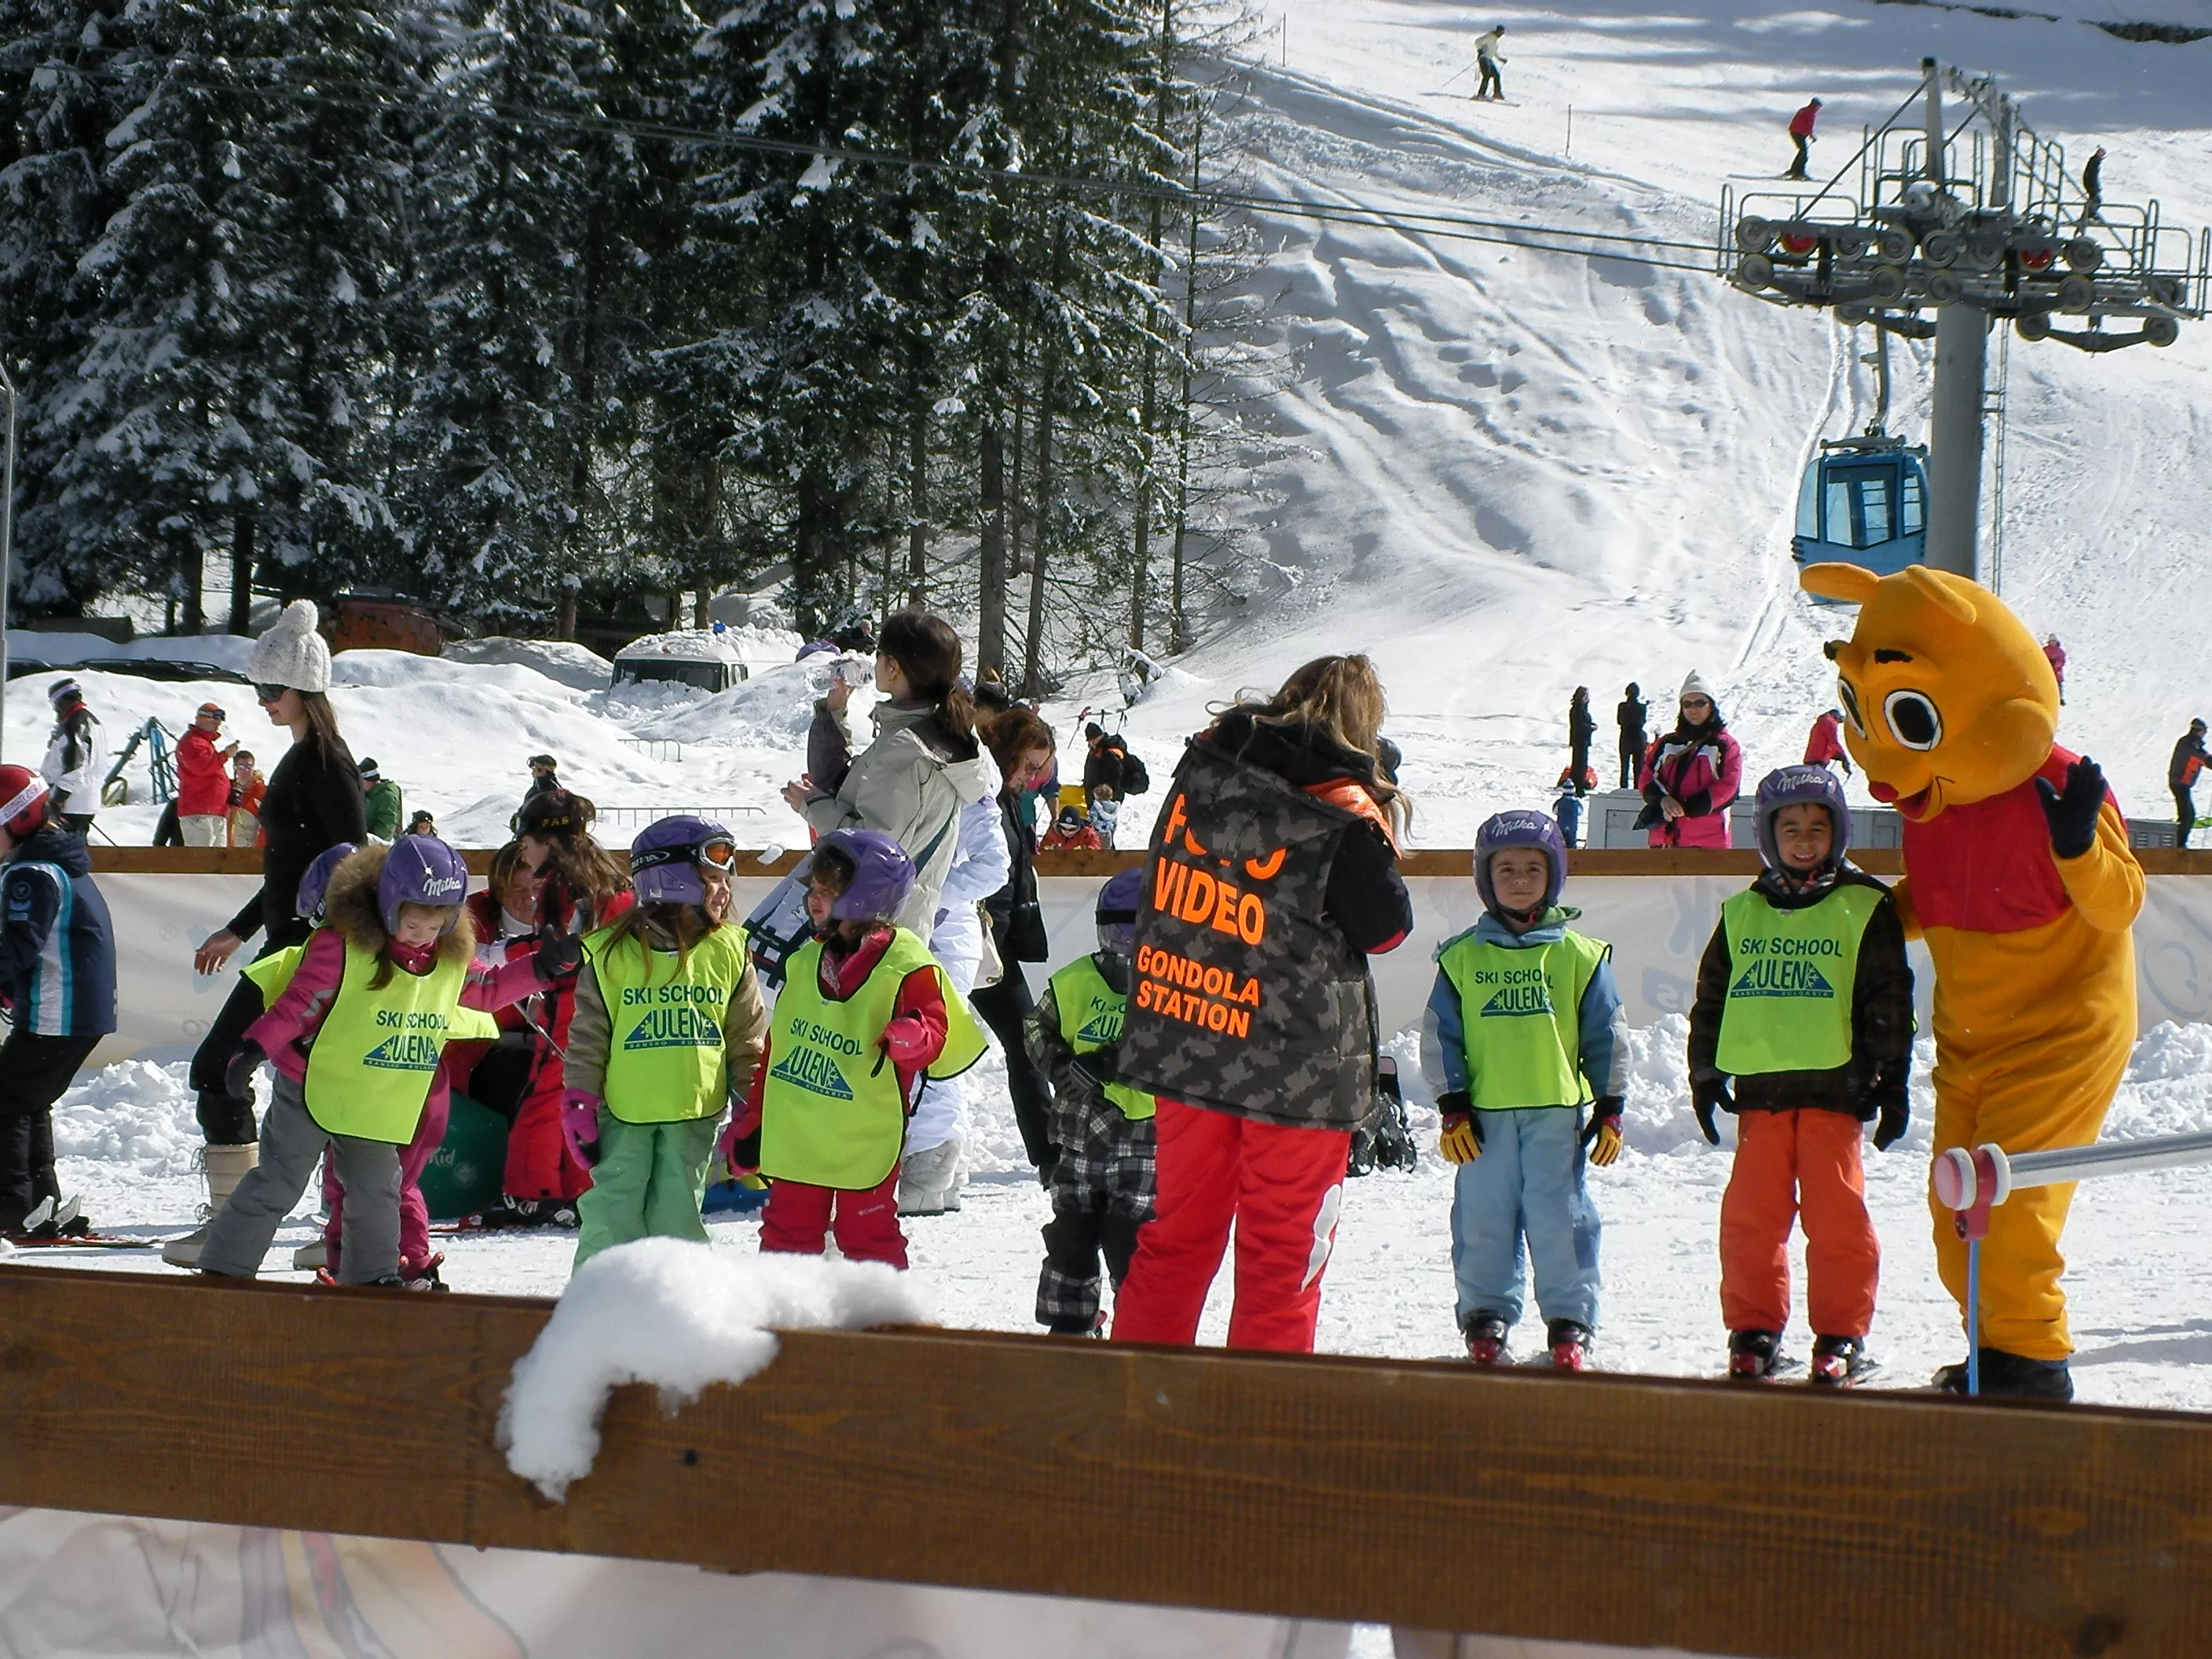 Bansko Fun Holidays in Bulgaria, Europe | Snowboarding,Skiing - Rated 0.8